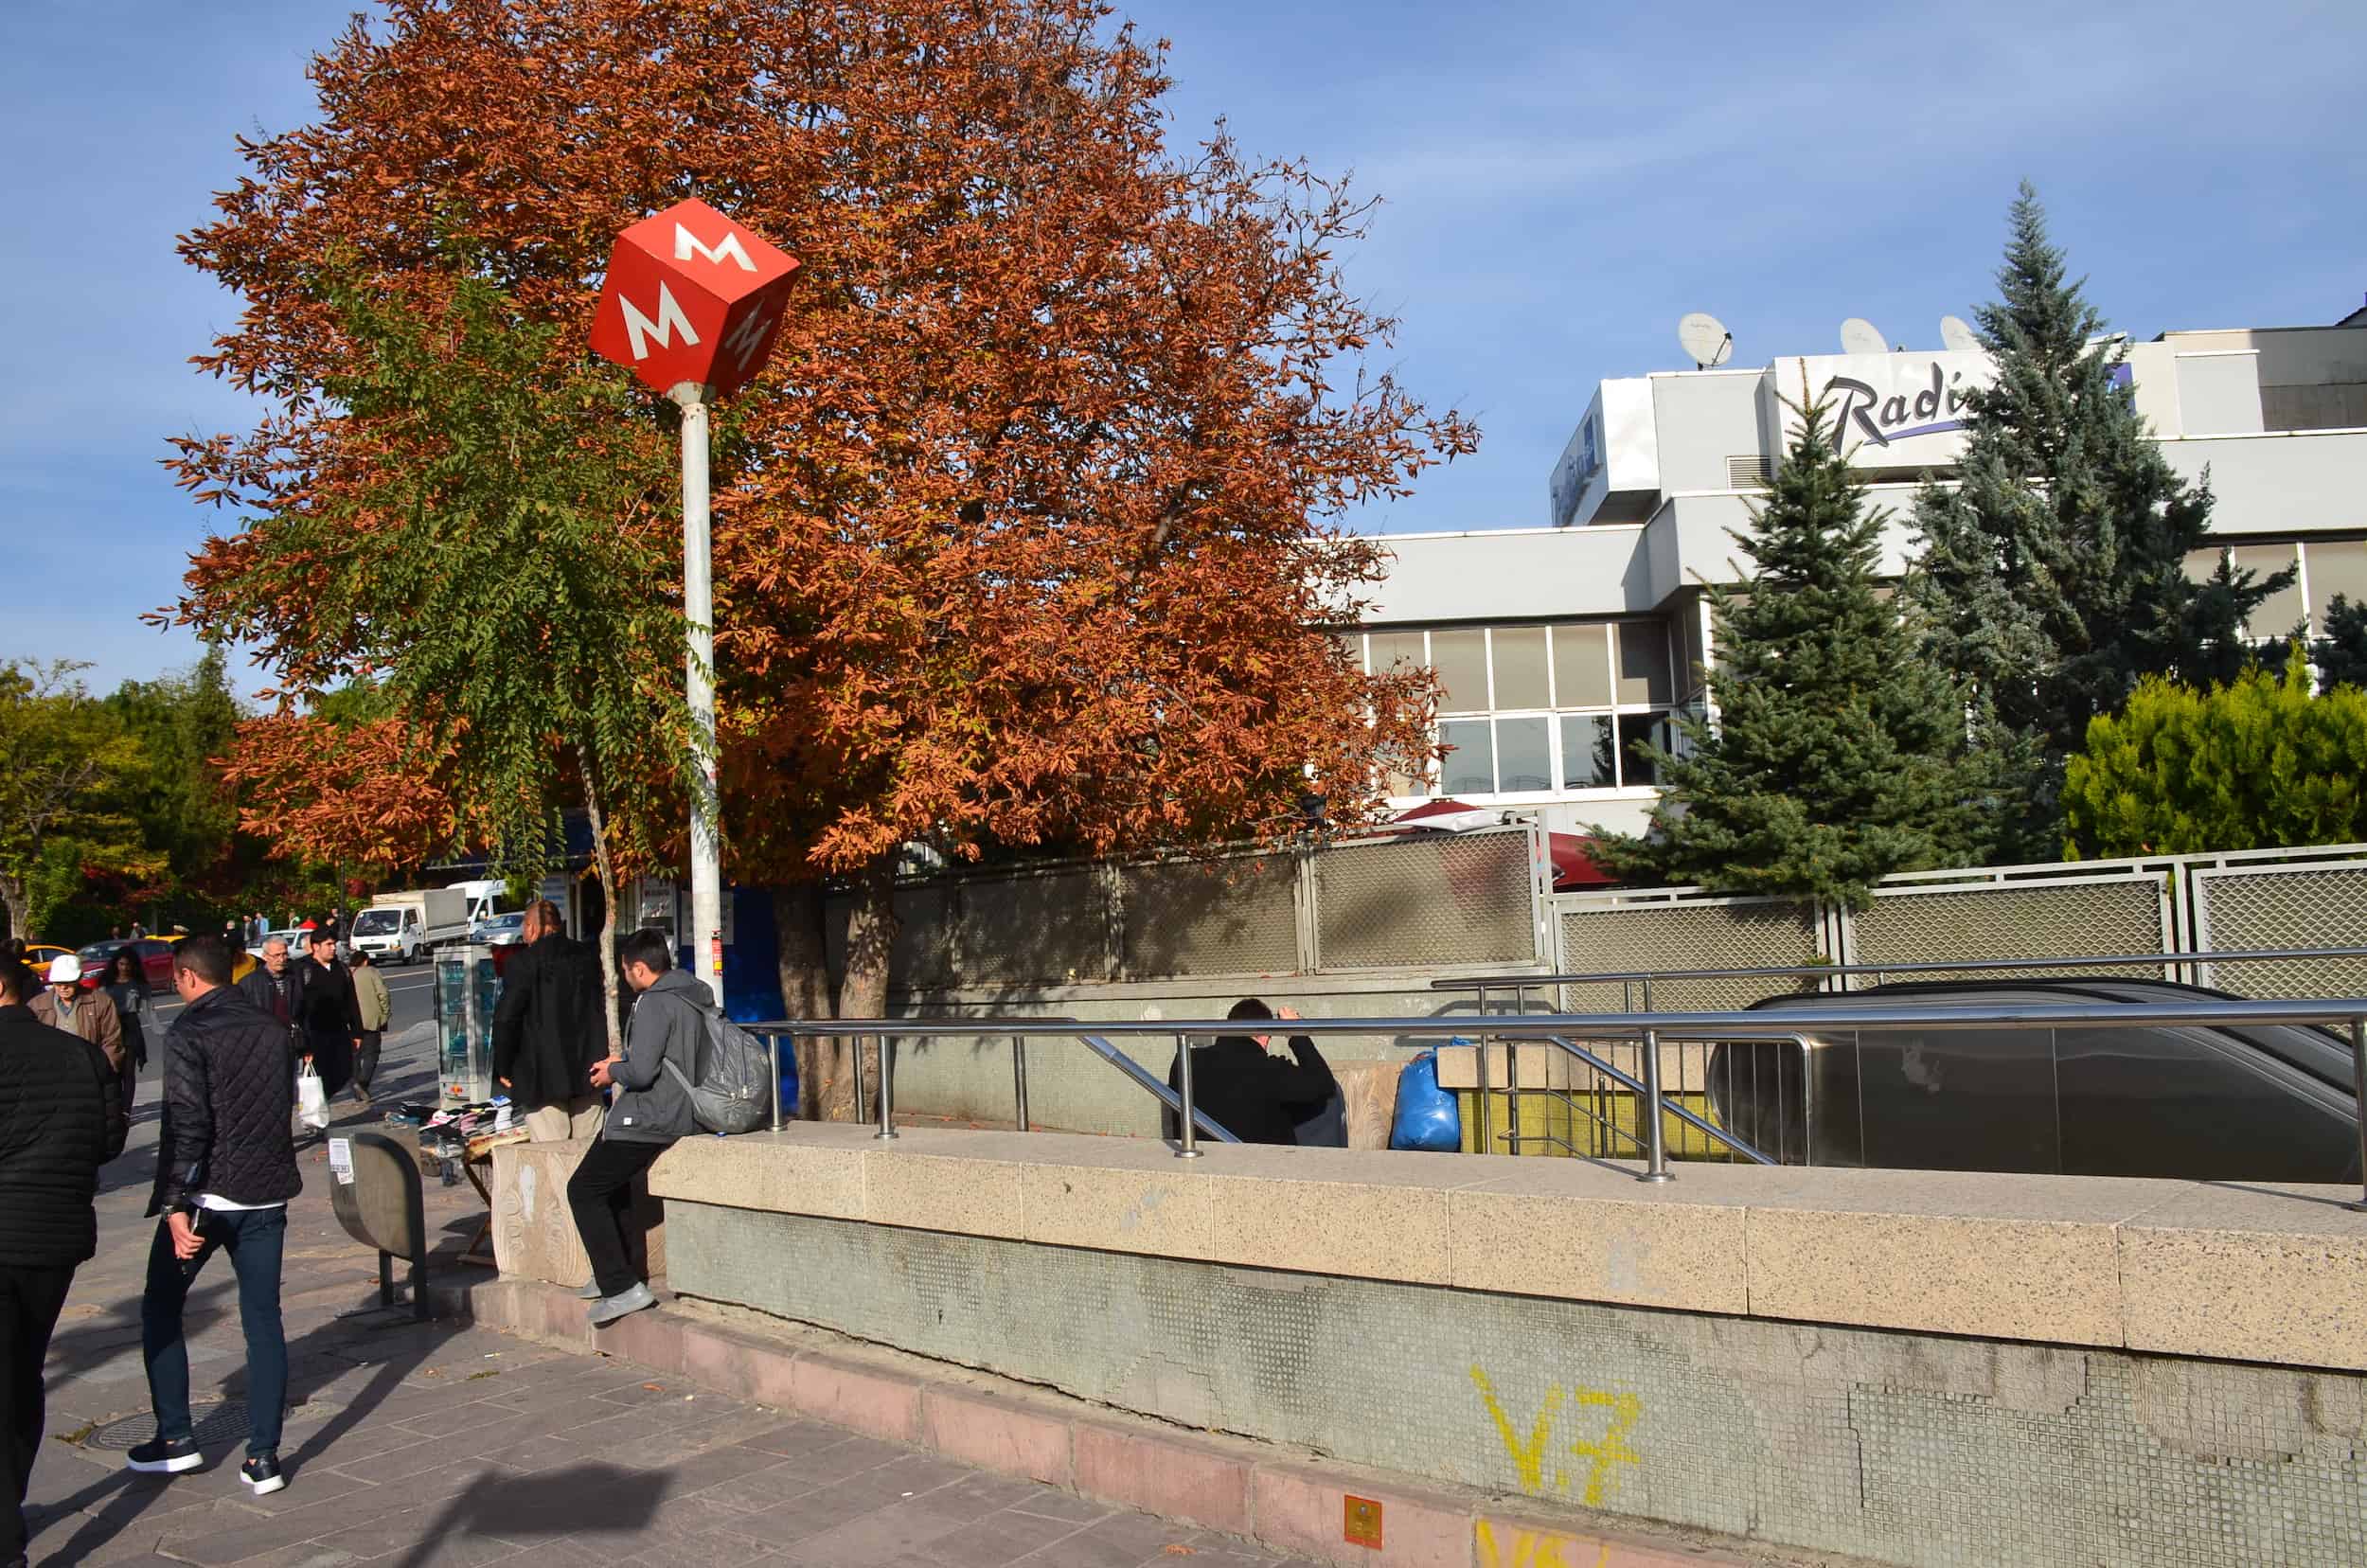 Outside Ulus metro station in Ankara, Turkey